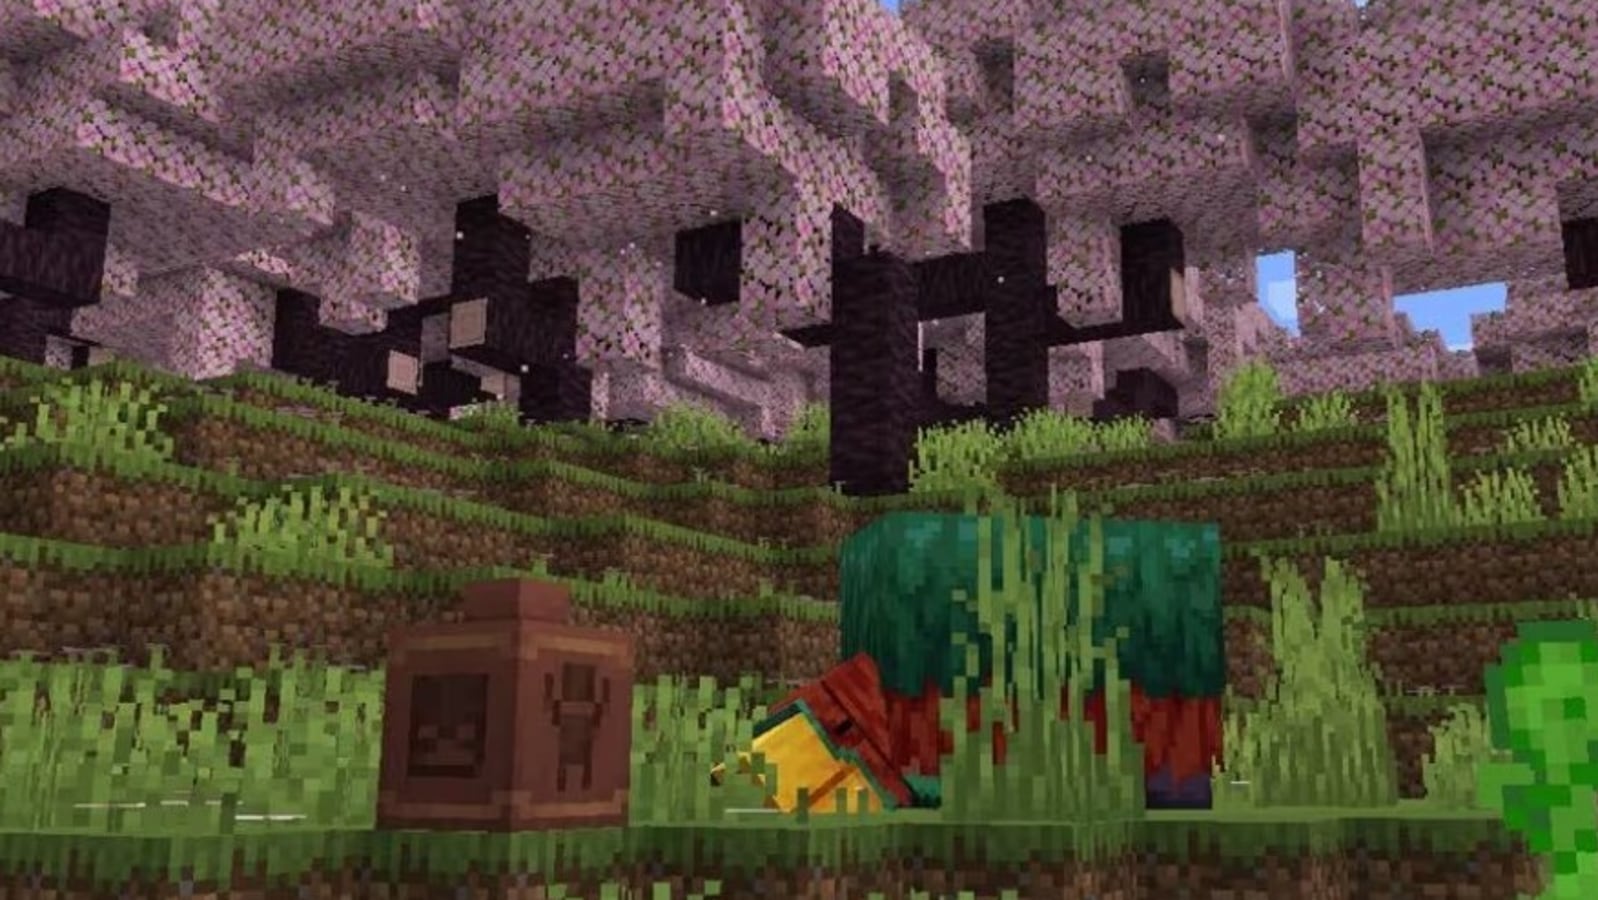 Minecraft gameplay screenshot